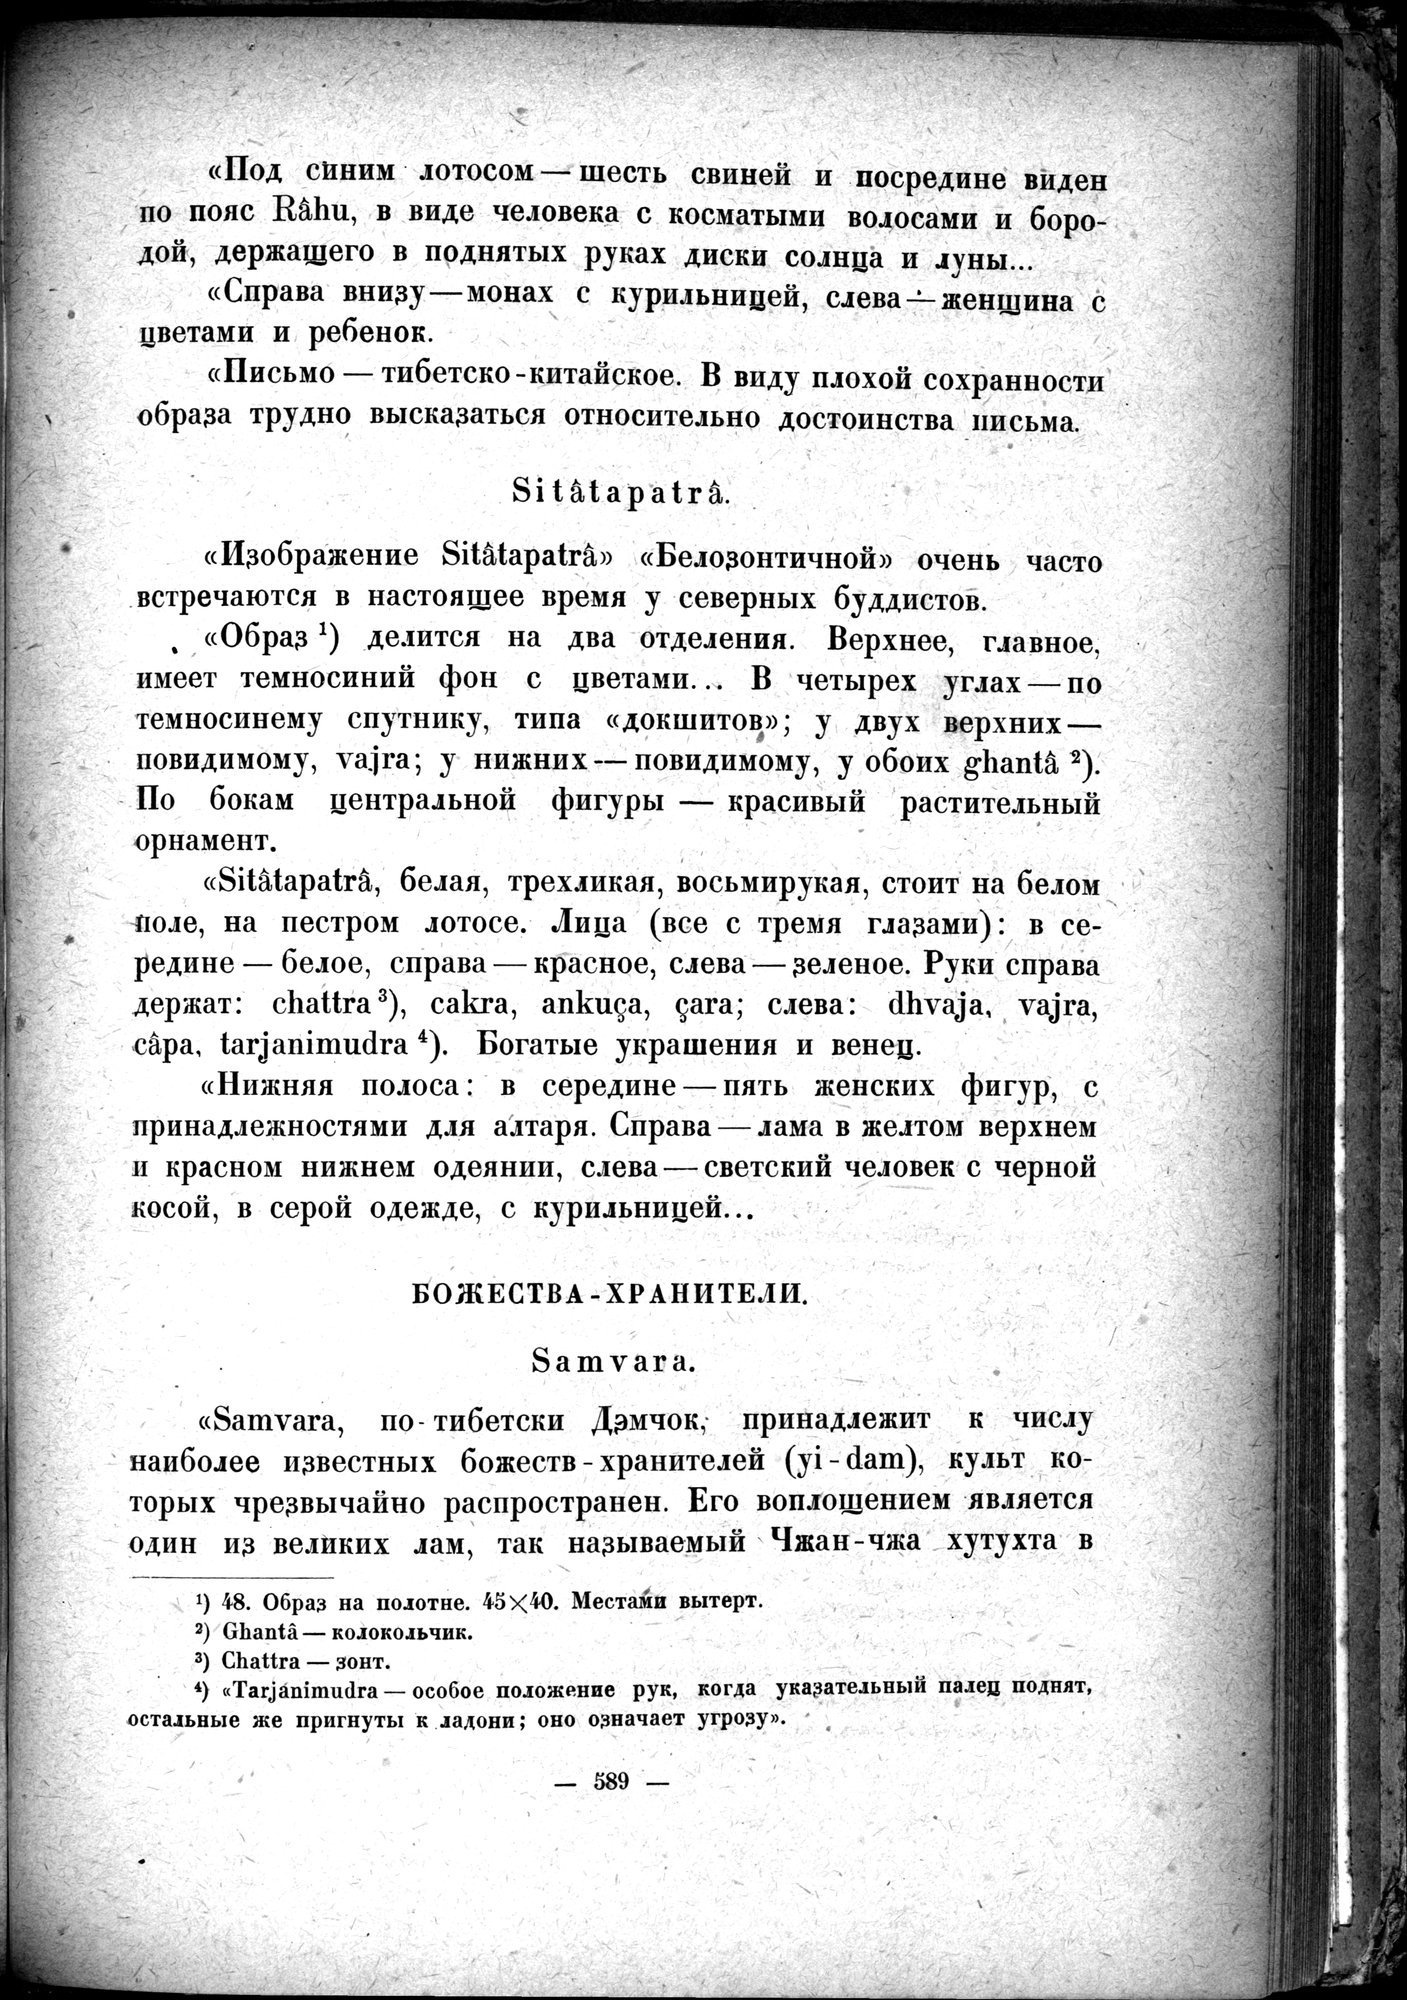 Mongoliya i Amdo i mertby gorod Khara-Khoto : vol.1 / Page 675 (Grayscale High Resolution Image)